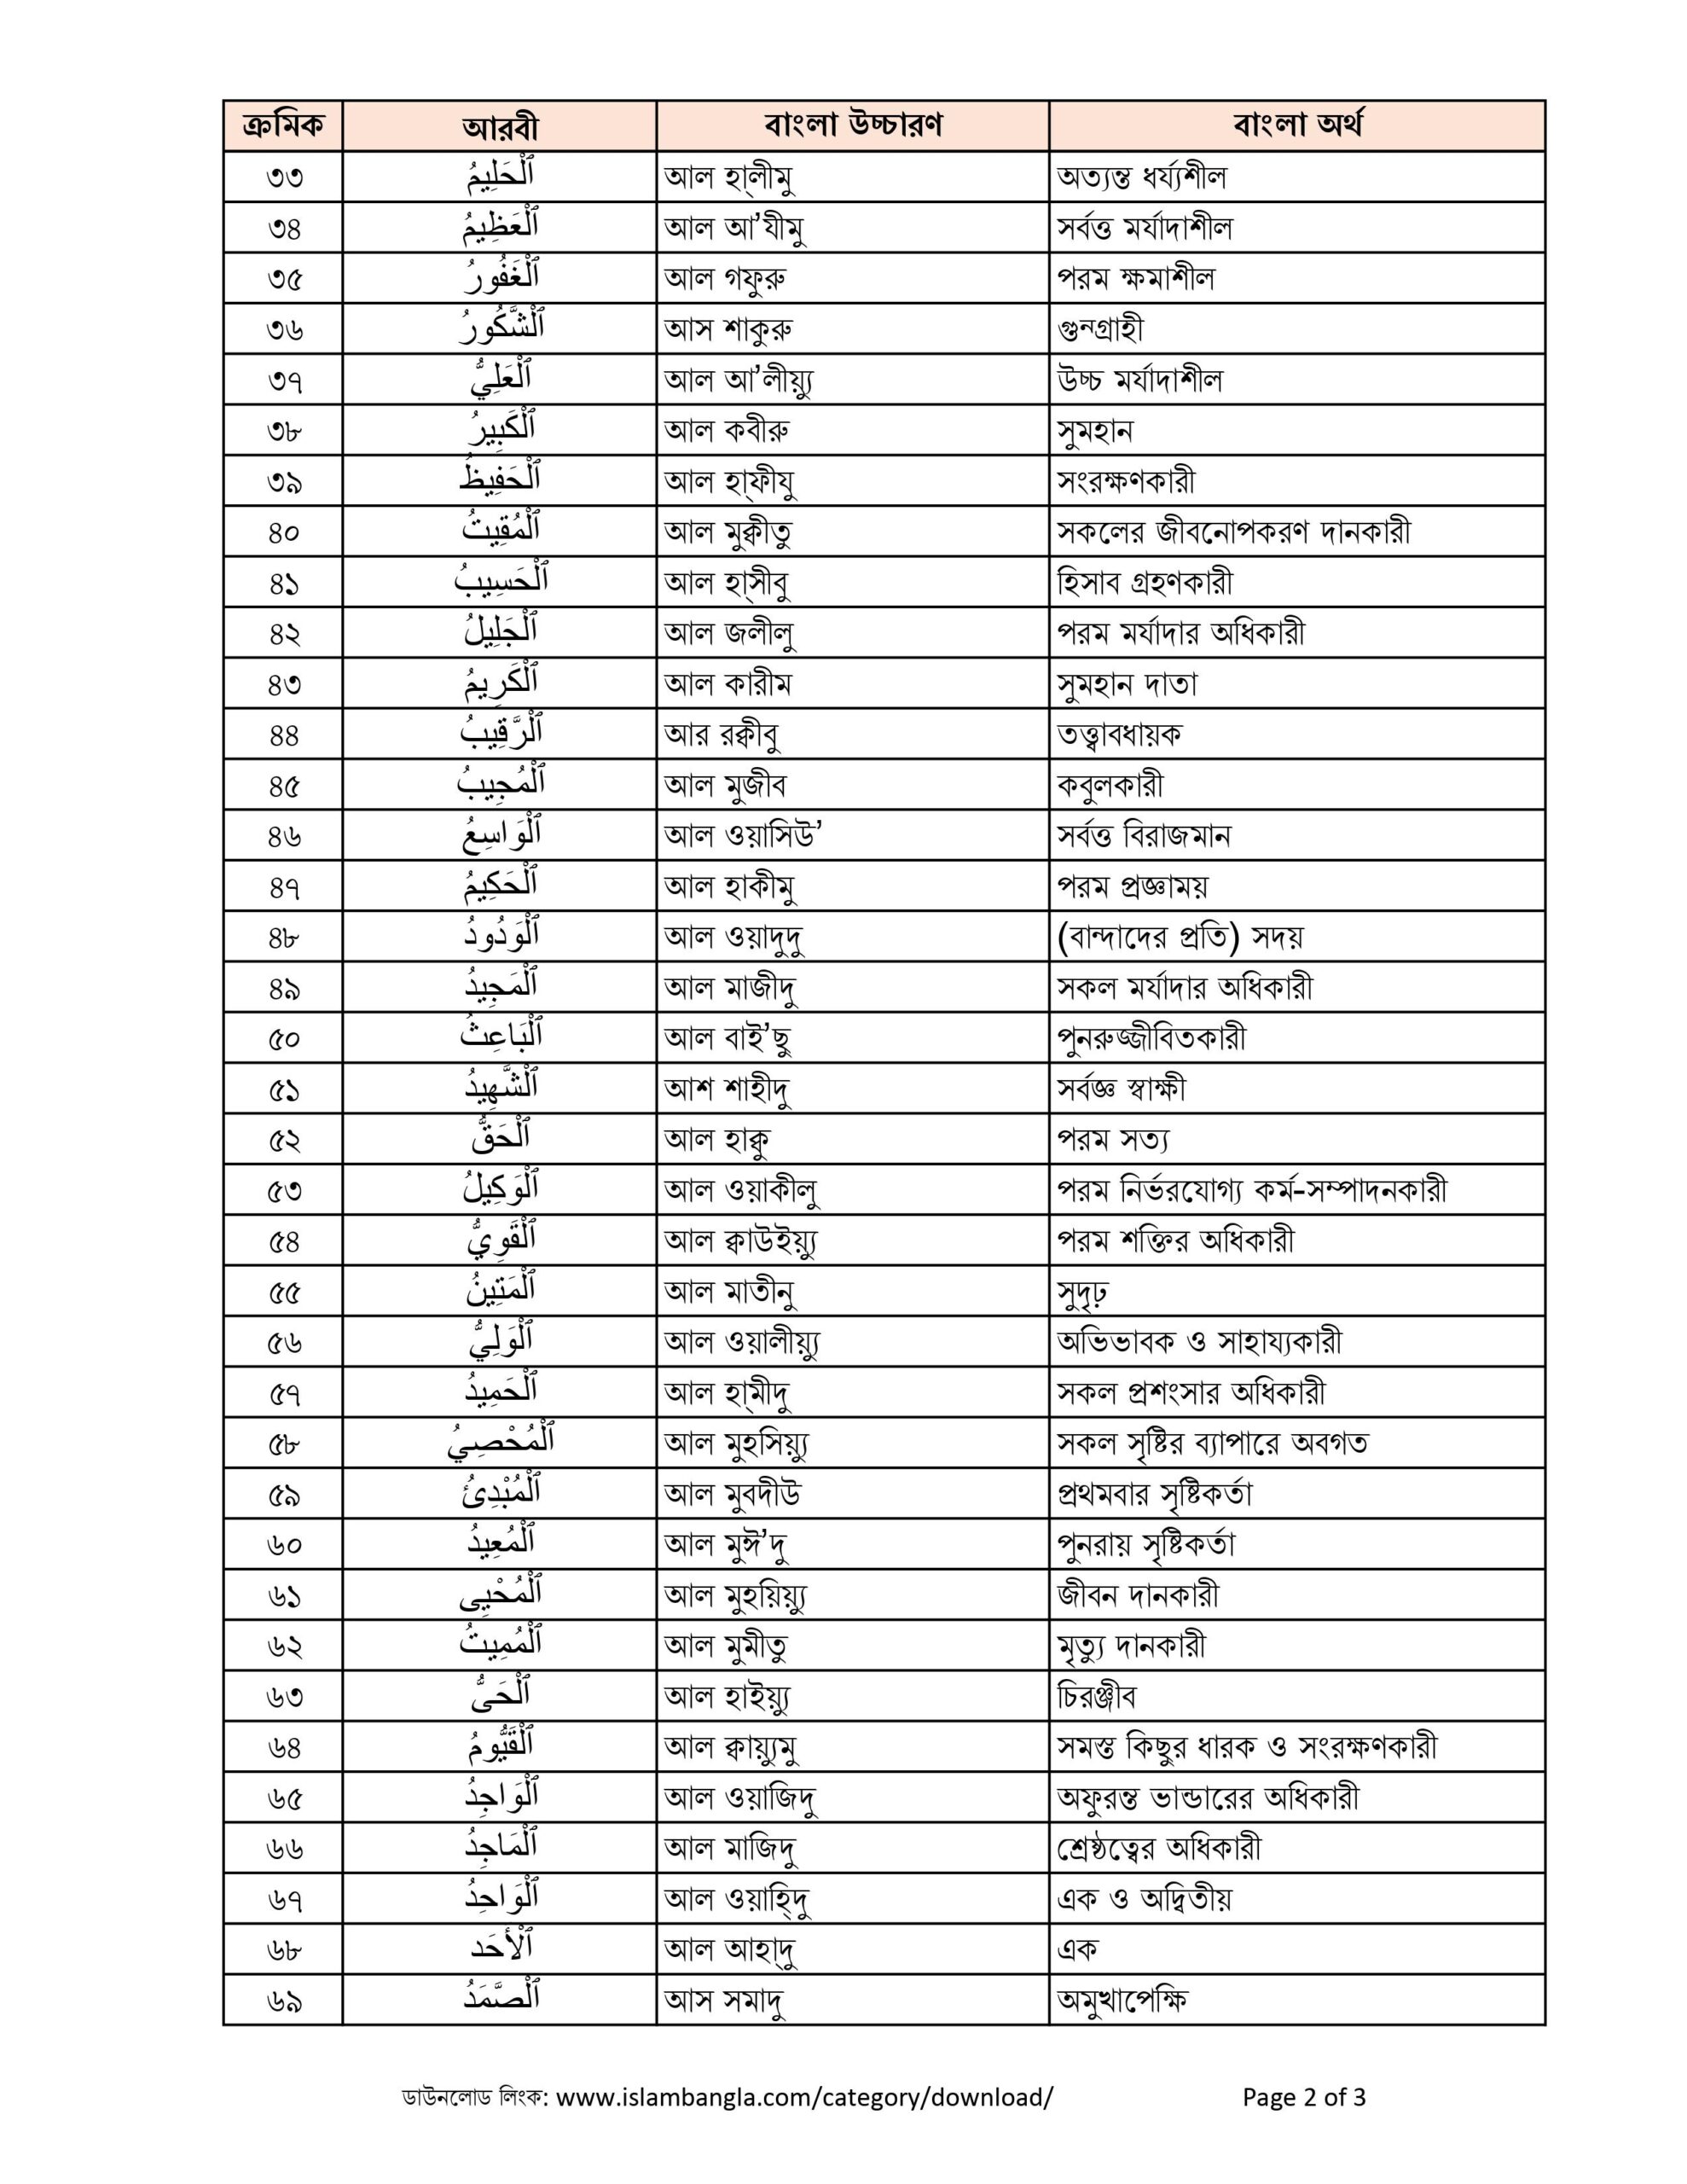 99 names of allah list bangla pdf